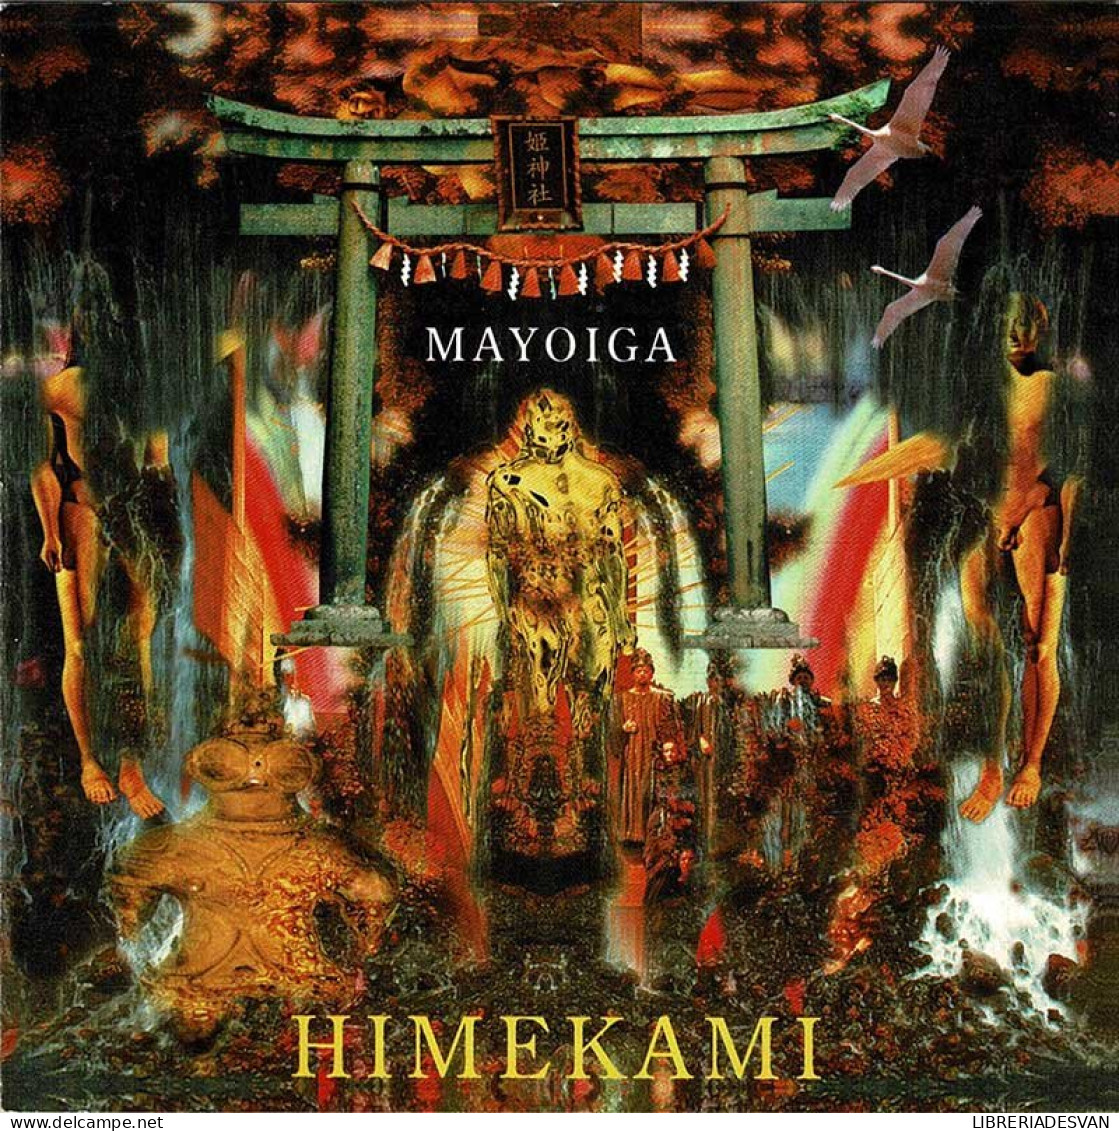 Himekami - Mayoiga. CD - Nueva Era (New Age)